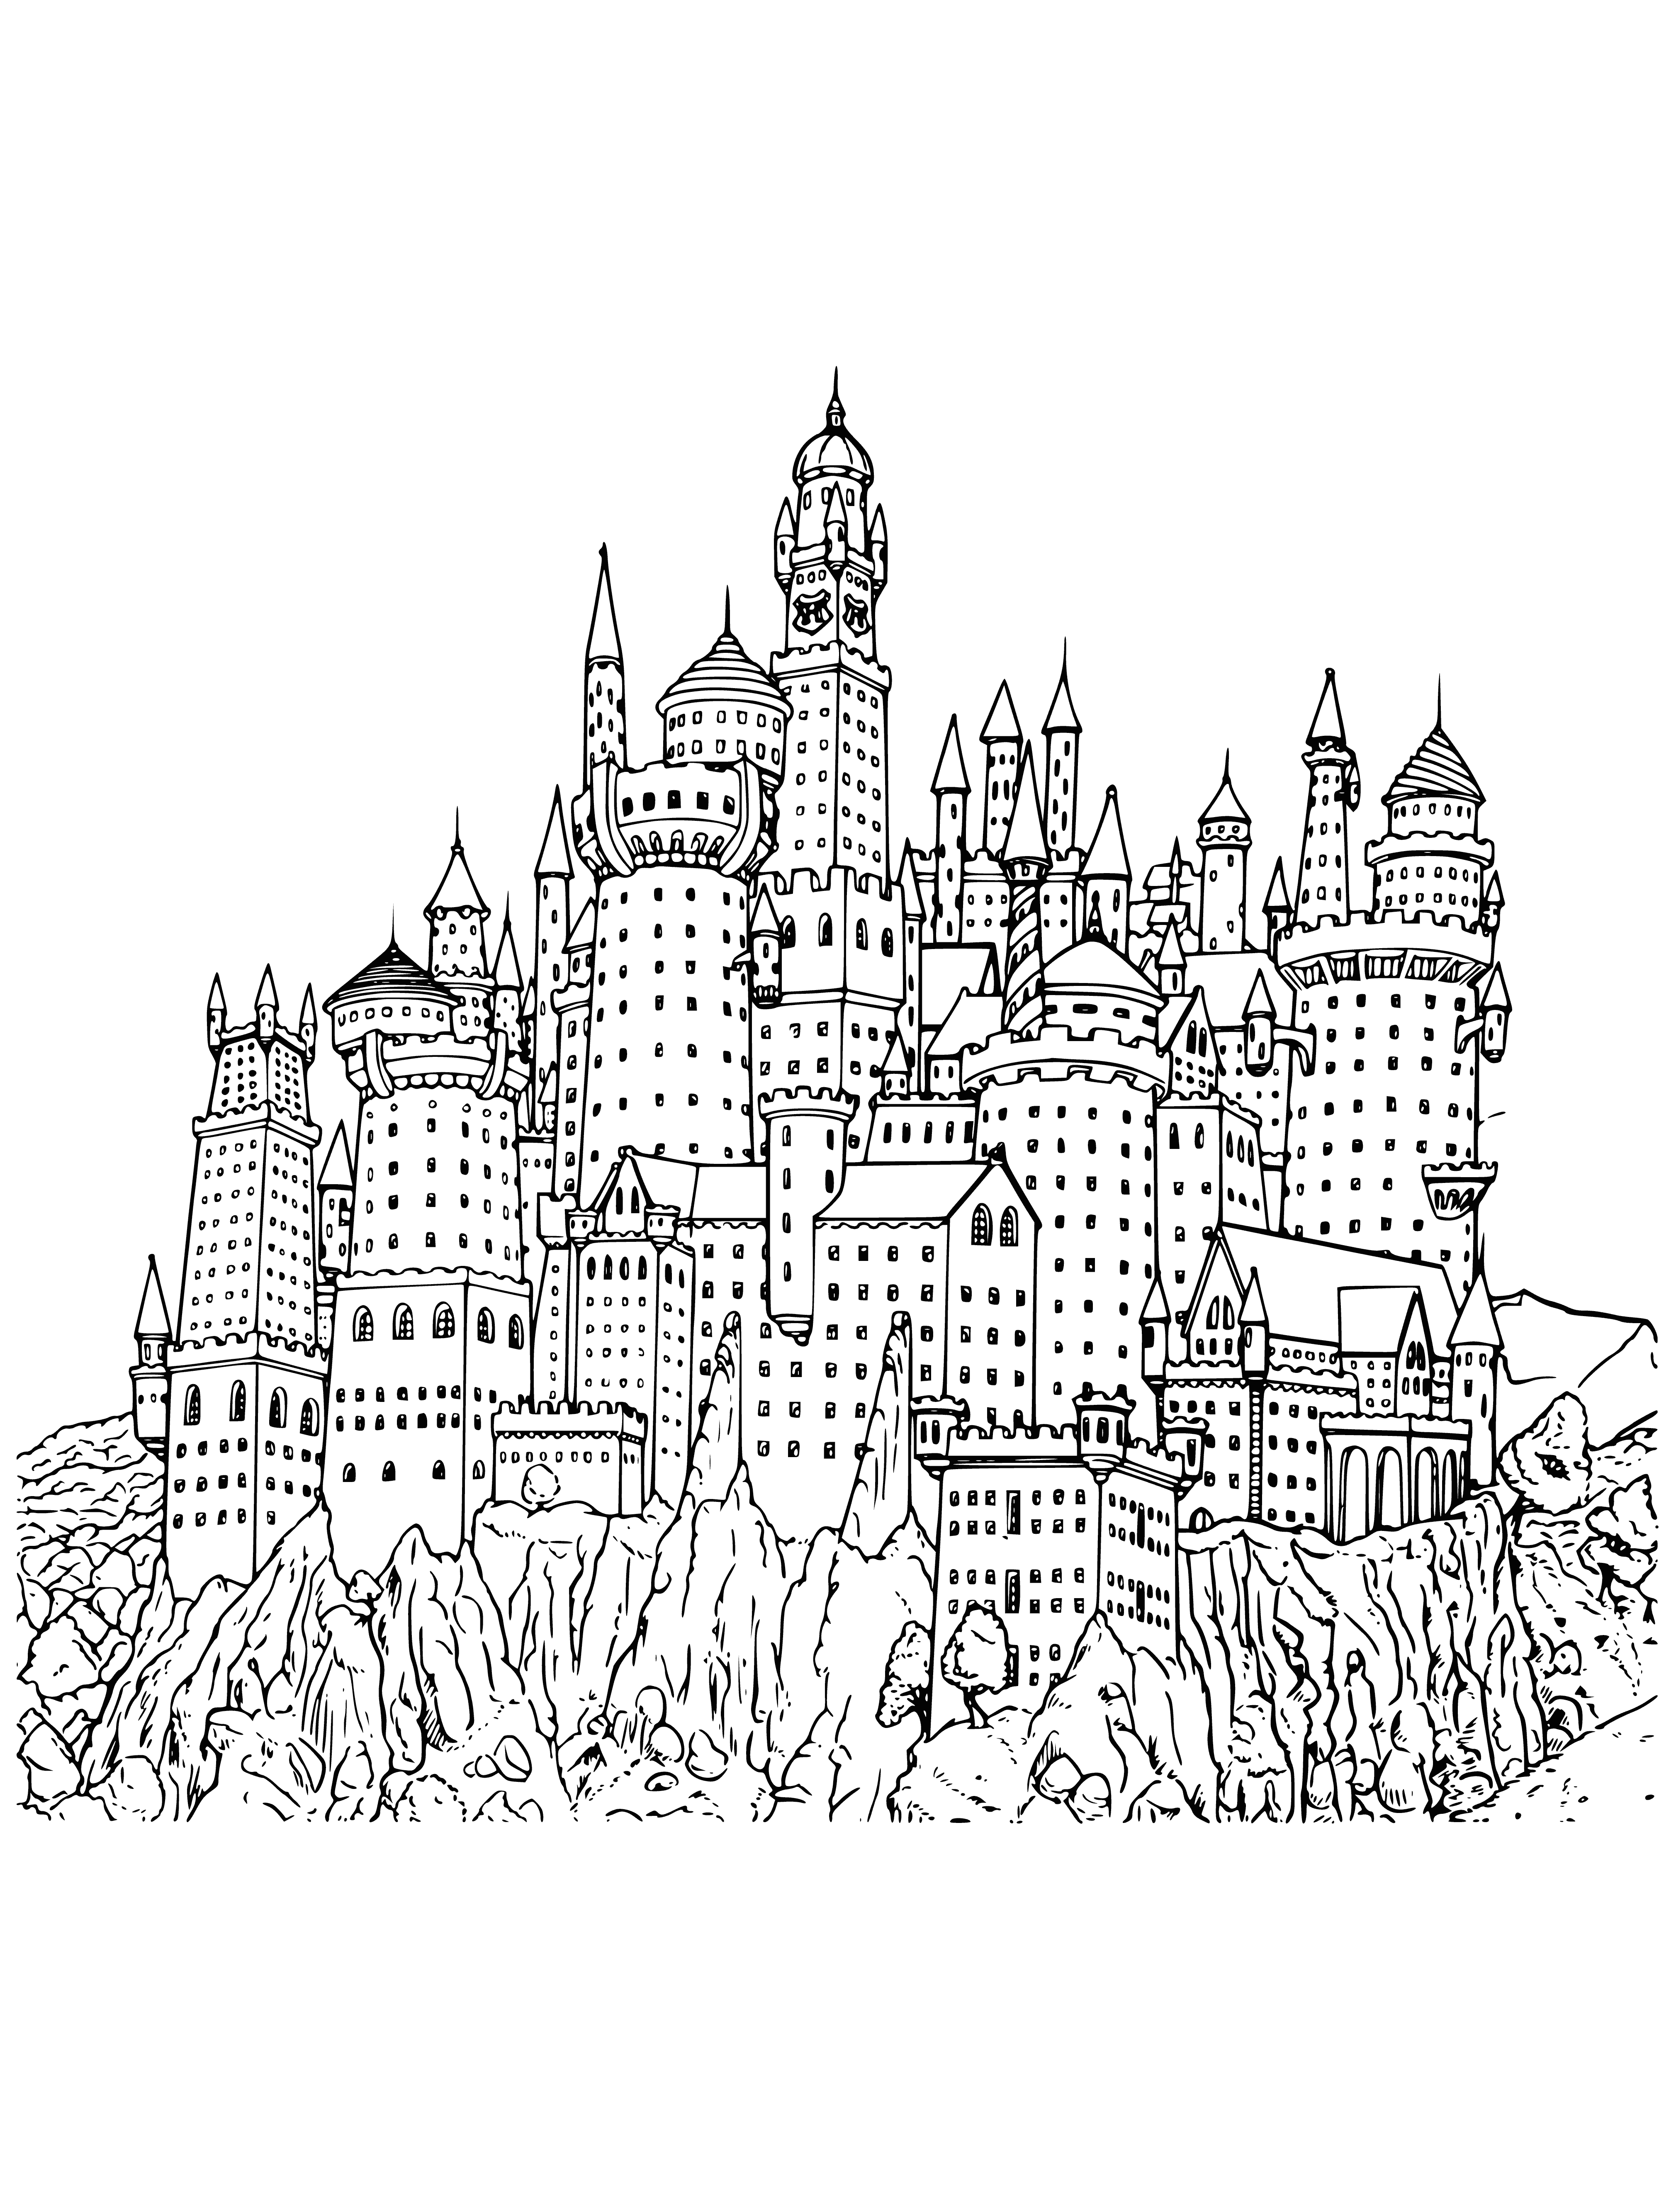 Hogwarts Castle coloring page